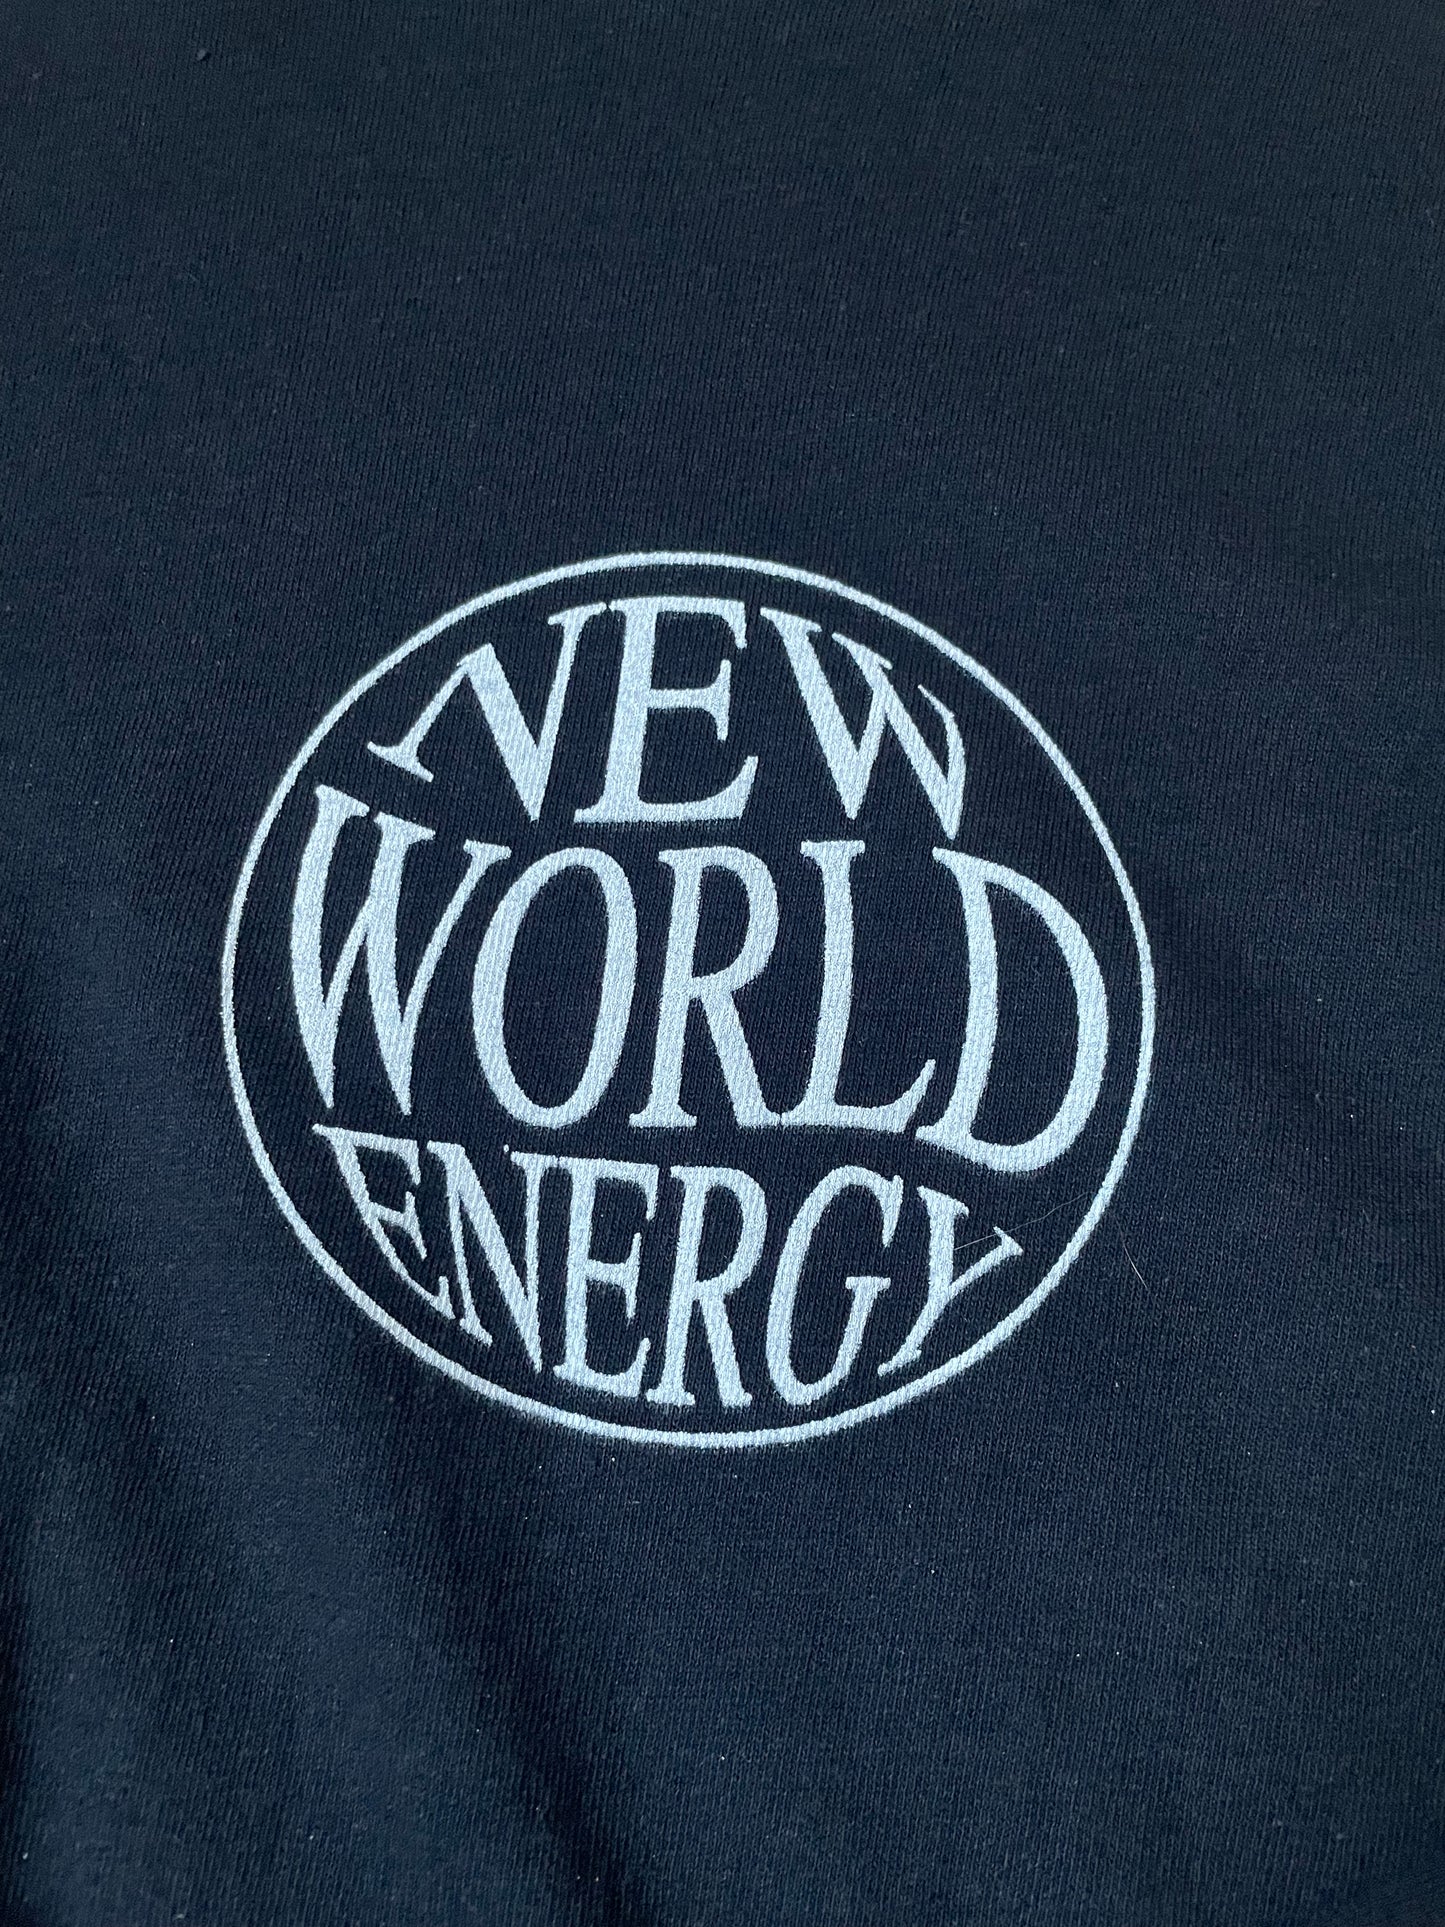 New World Energy - Long Sleeve